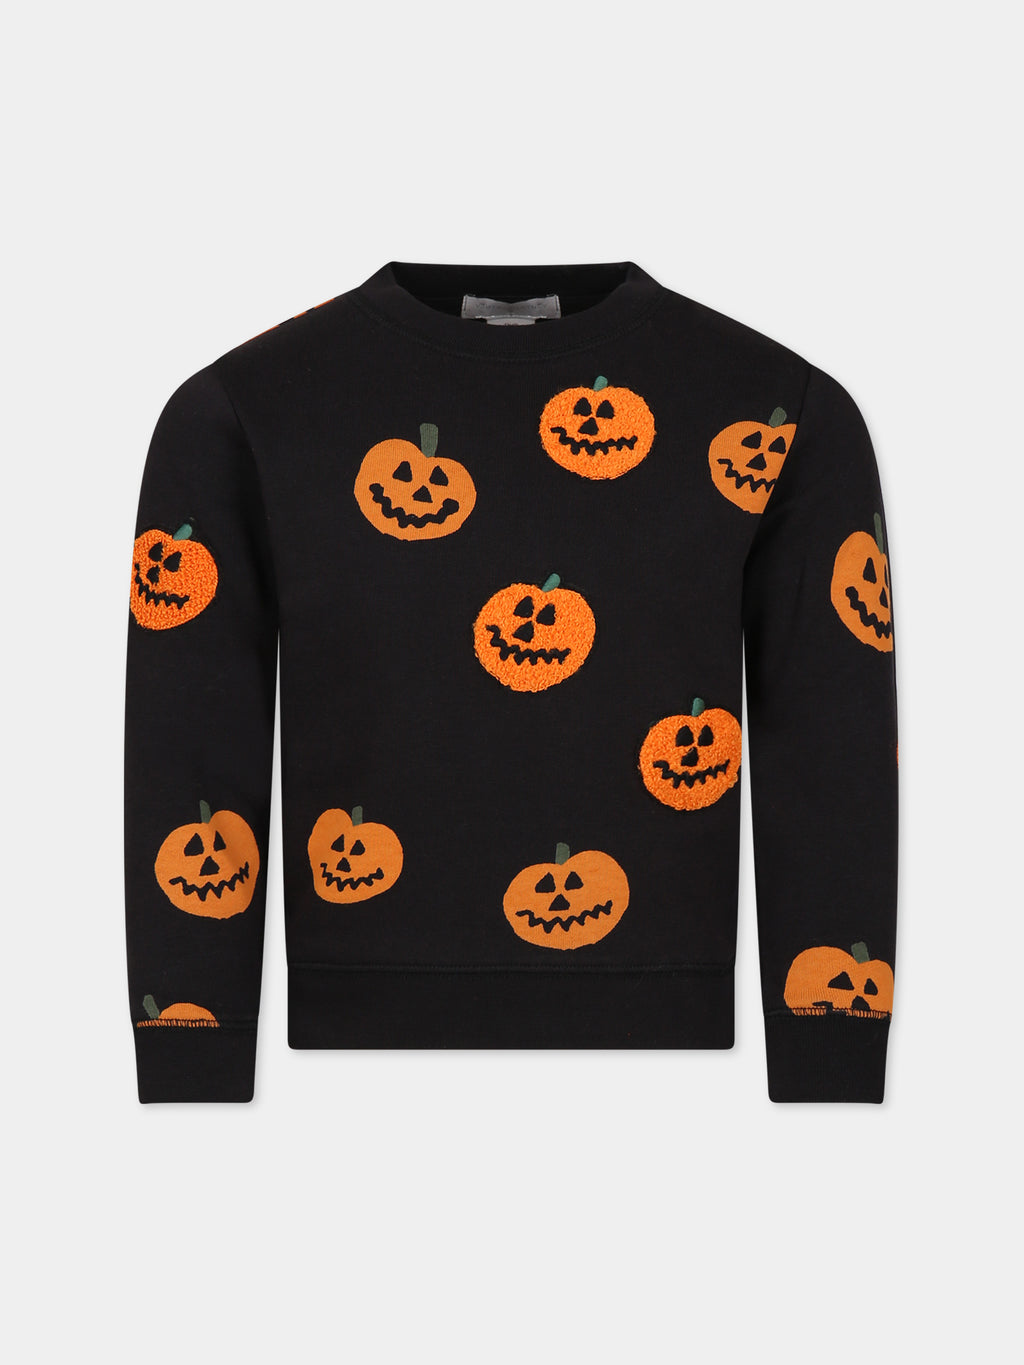 Black sweatshirt for boy with pumpkins